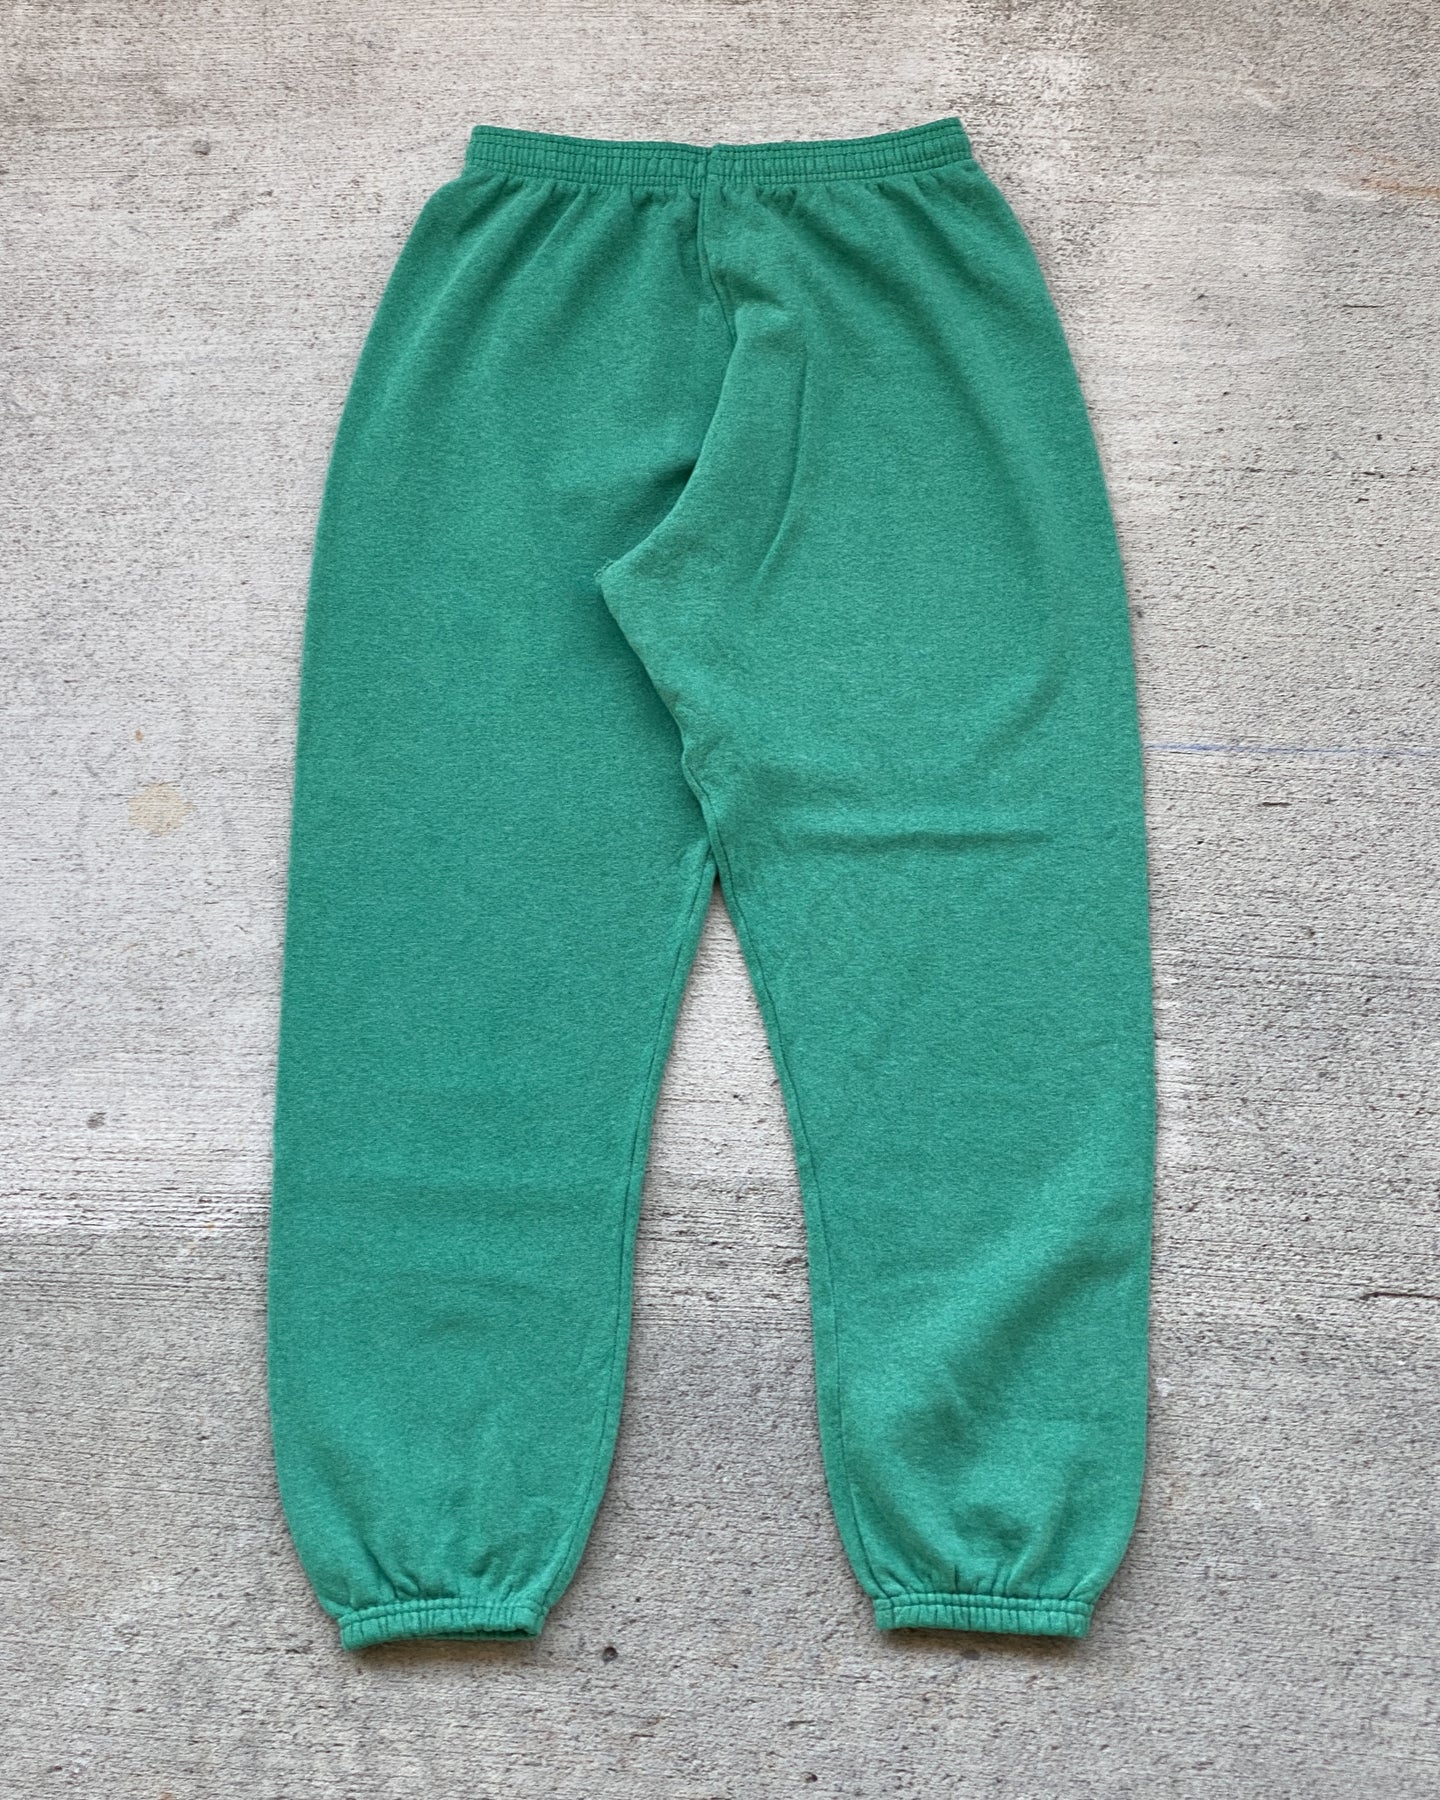 1990s Kelly Green Sweatpants - Size Medium